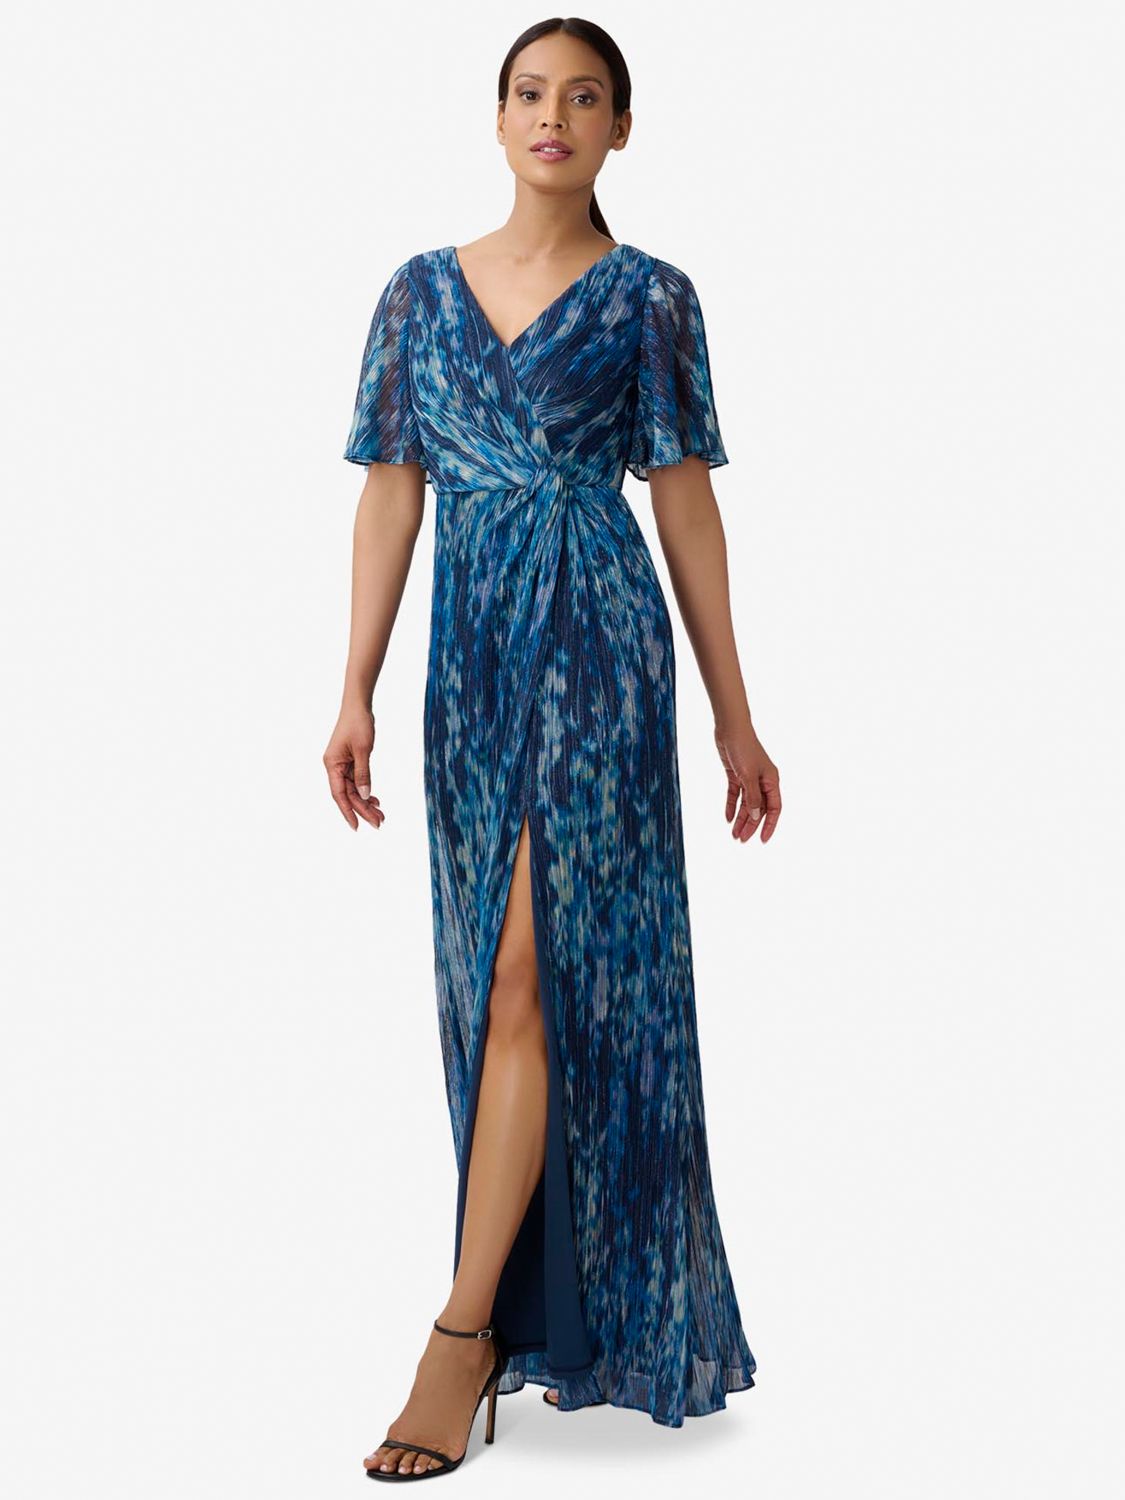 Adrianna Papell Metal Mesh Maxi Dress, Navy/Multi at John Lewis & Partners